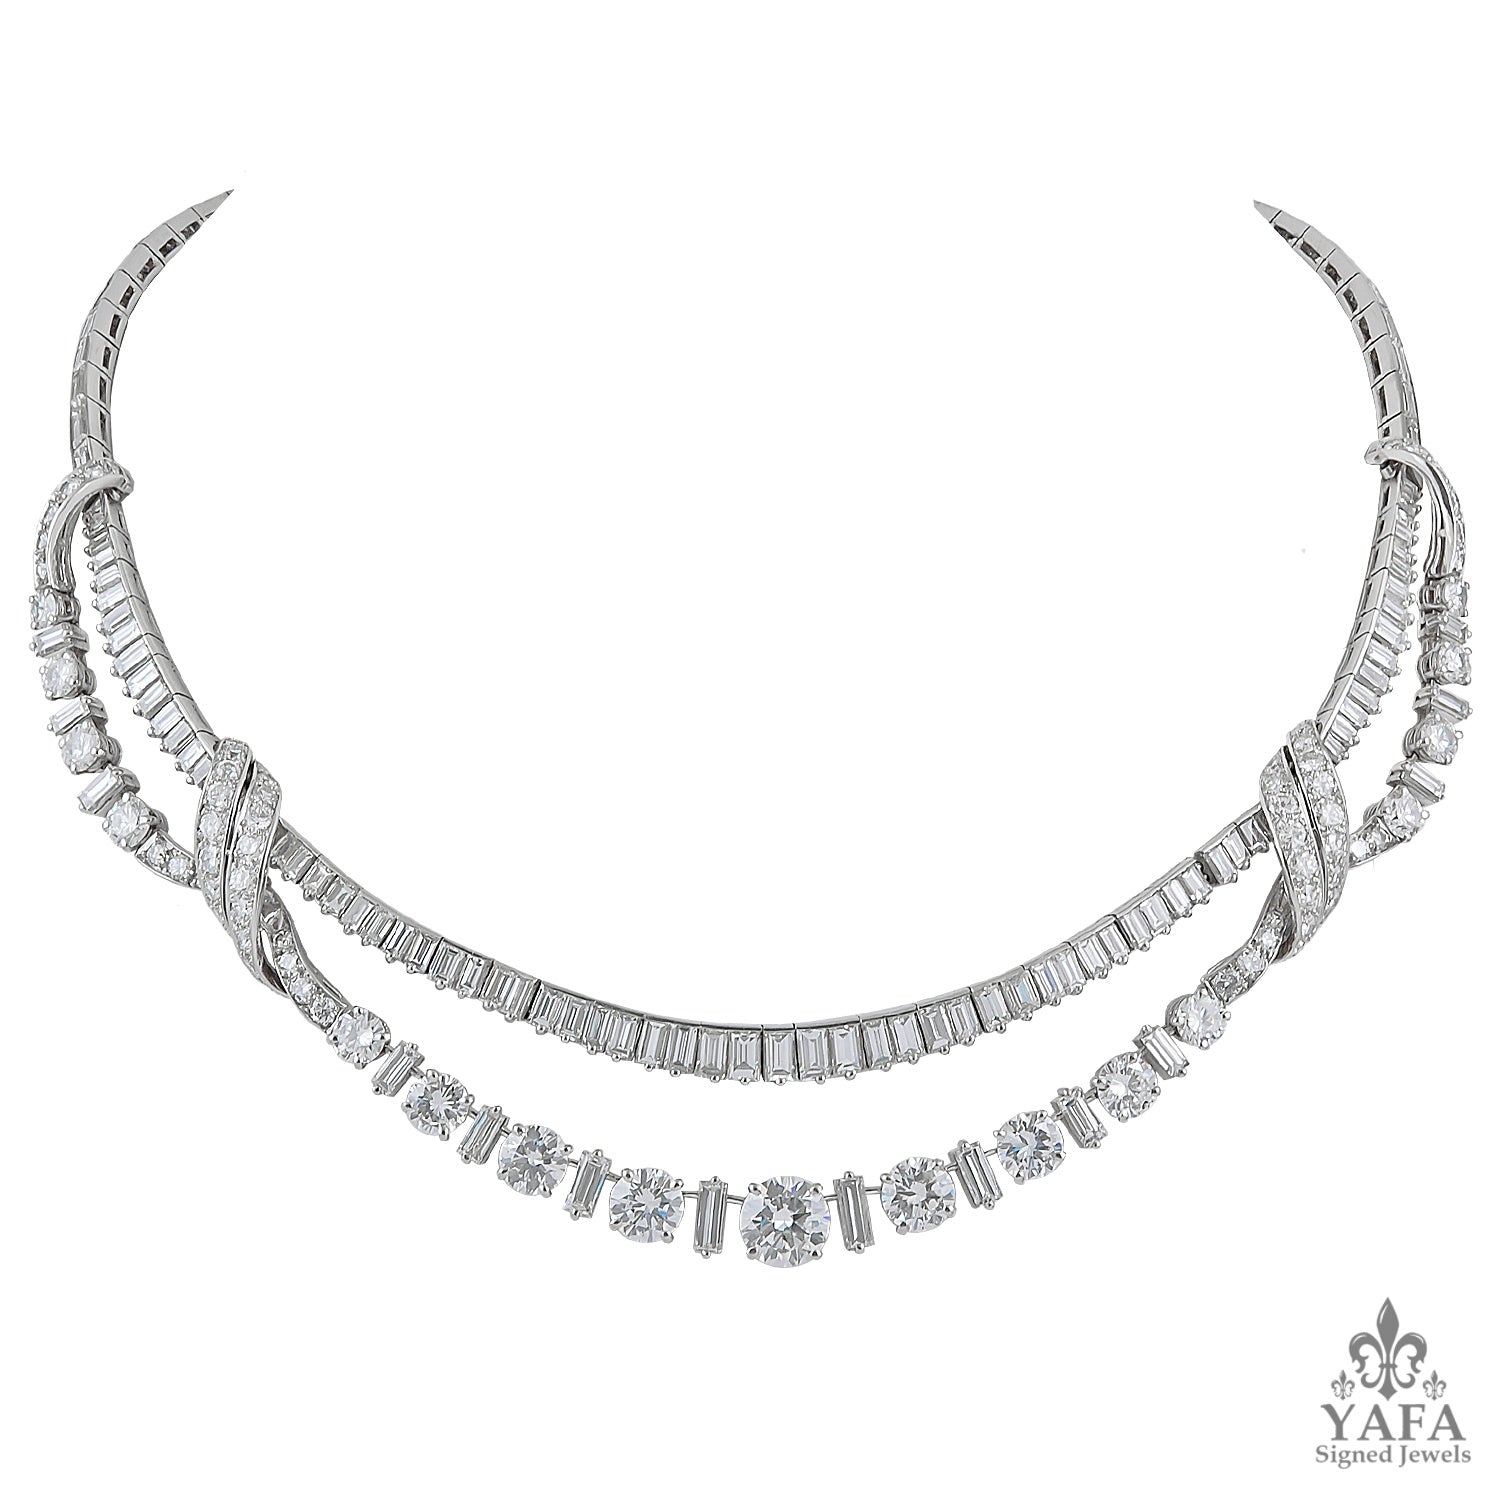 Platinum necklace with diamonds, contemporary, bespoke & modern - Sue Lane